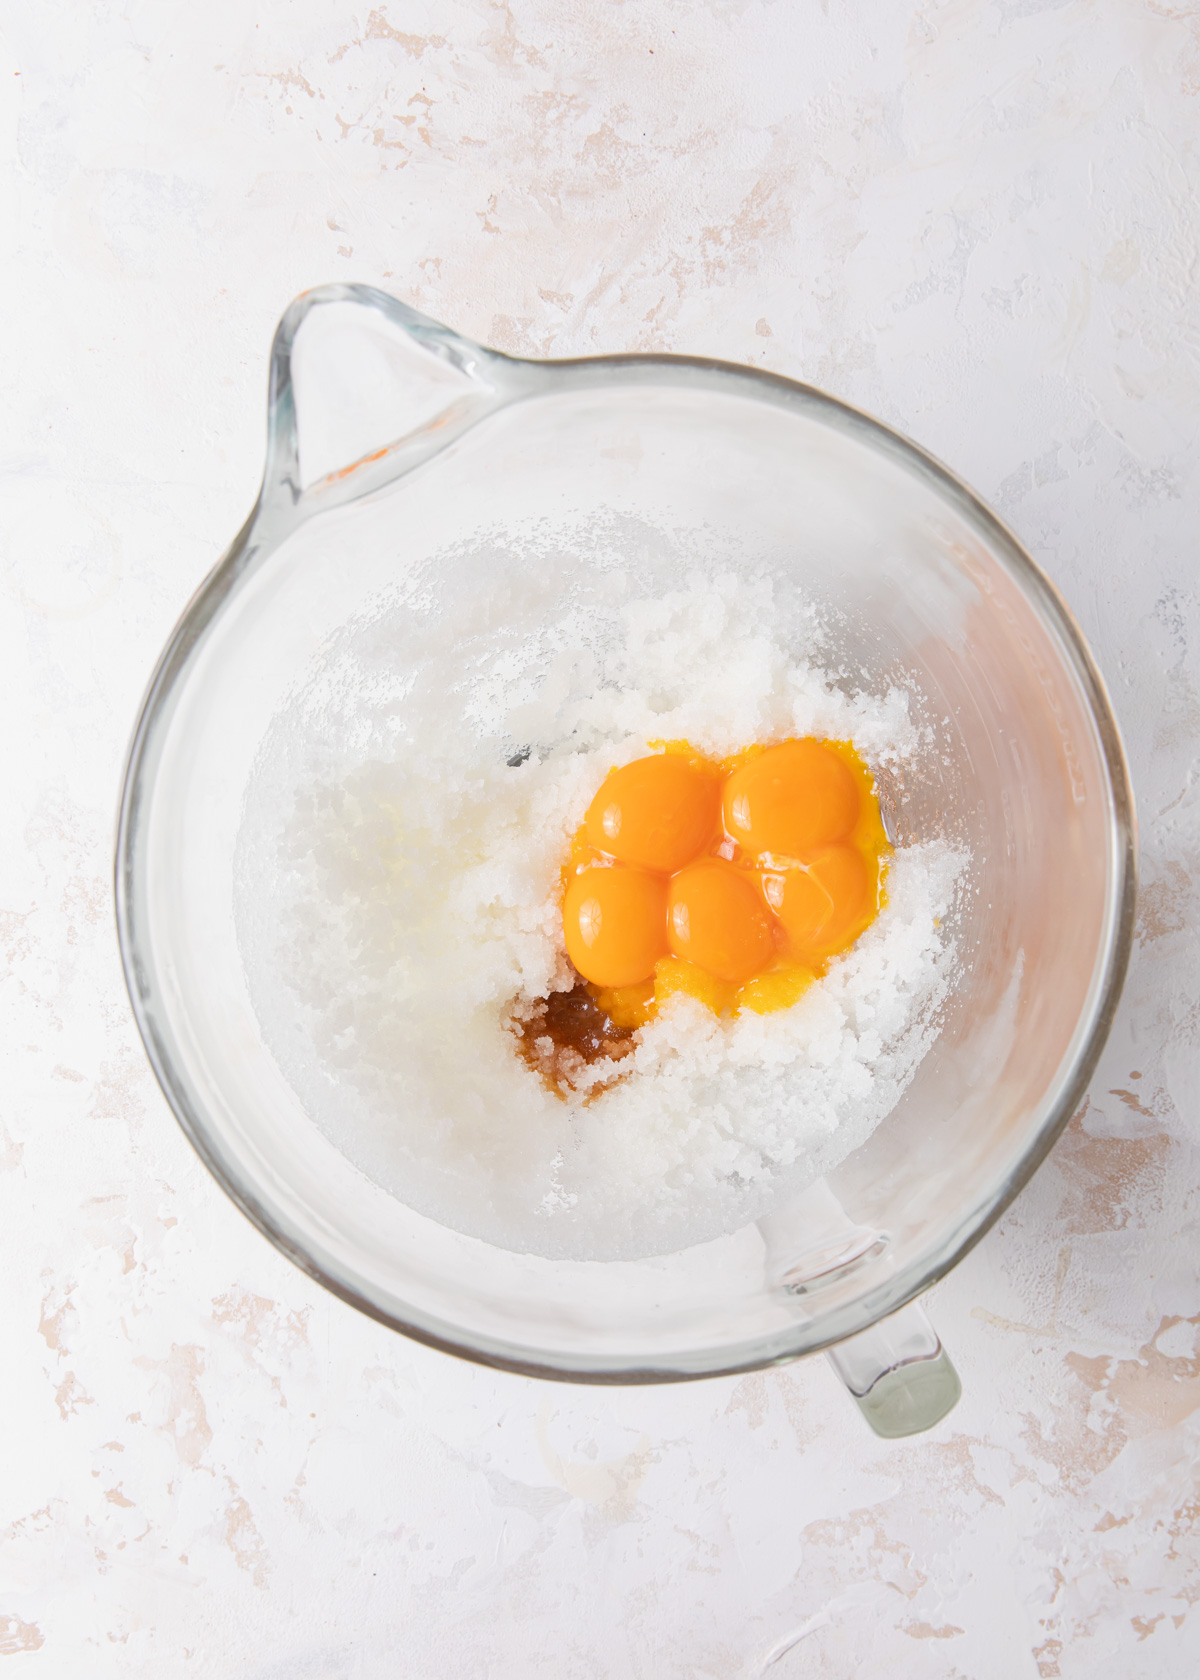 Sugar, oil, vanilla, and egg yolks in a mixing bowl